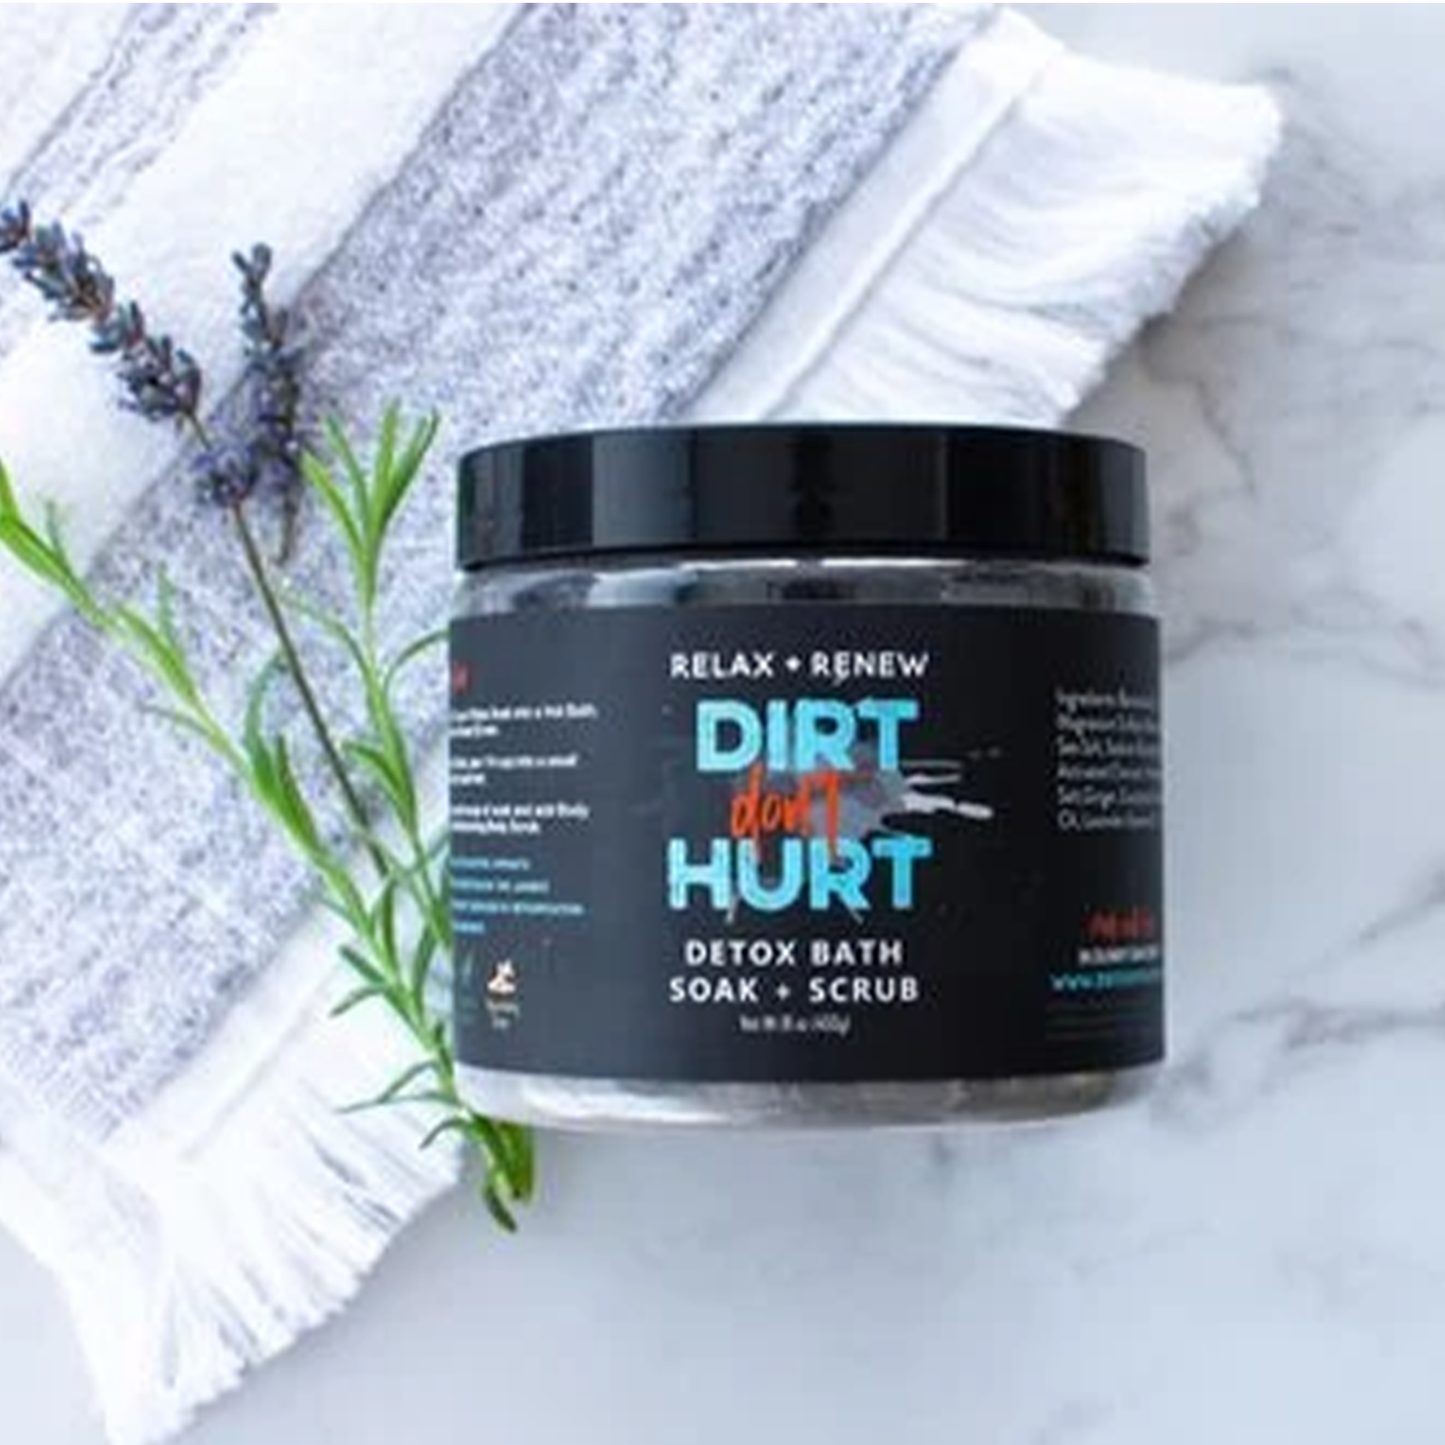 Dirt Don't Hurt - Detox Bath Soak + Scrub; Relax, Rejuvenate + Renew